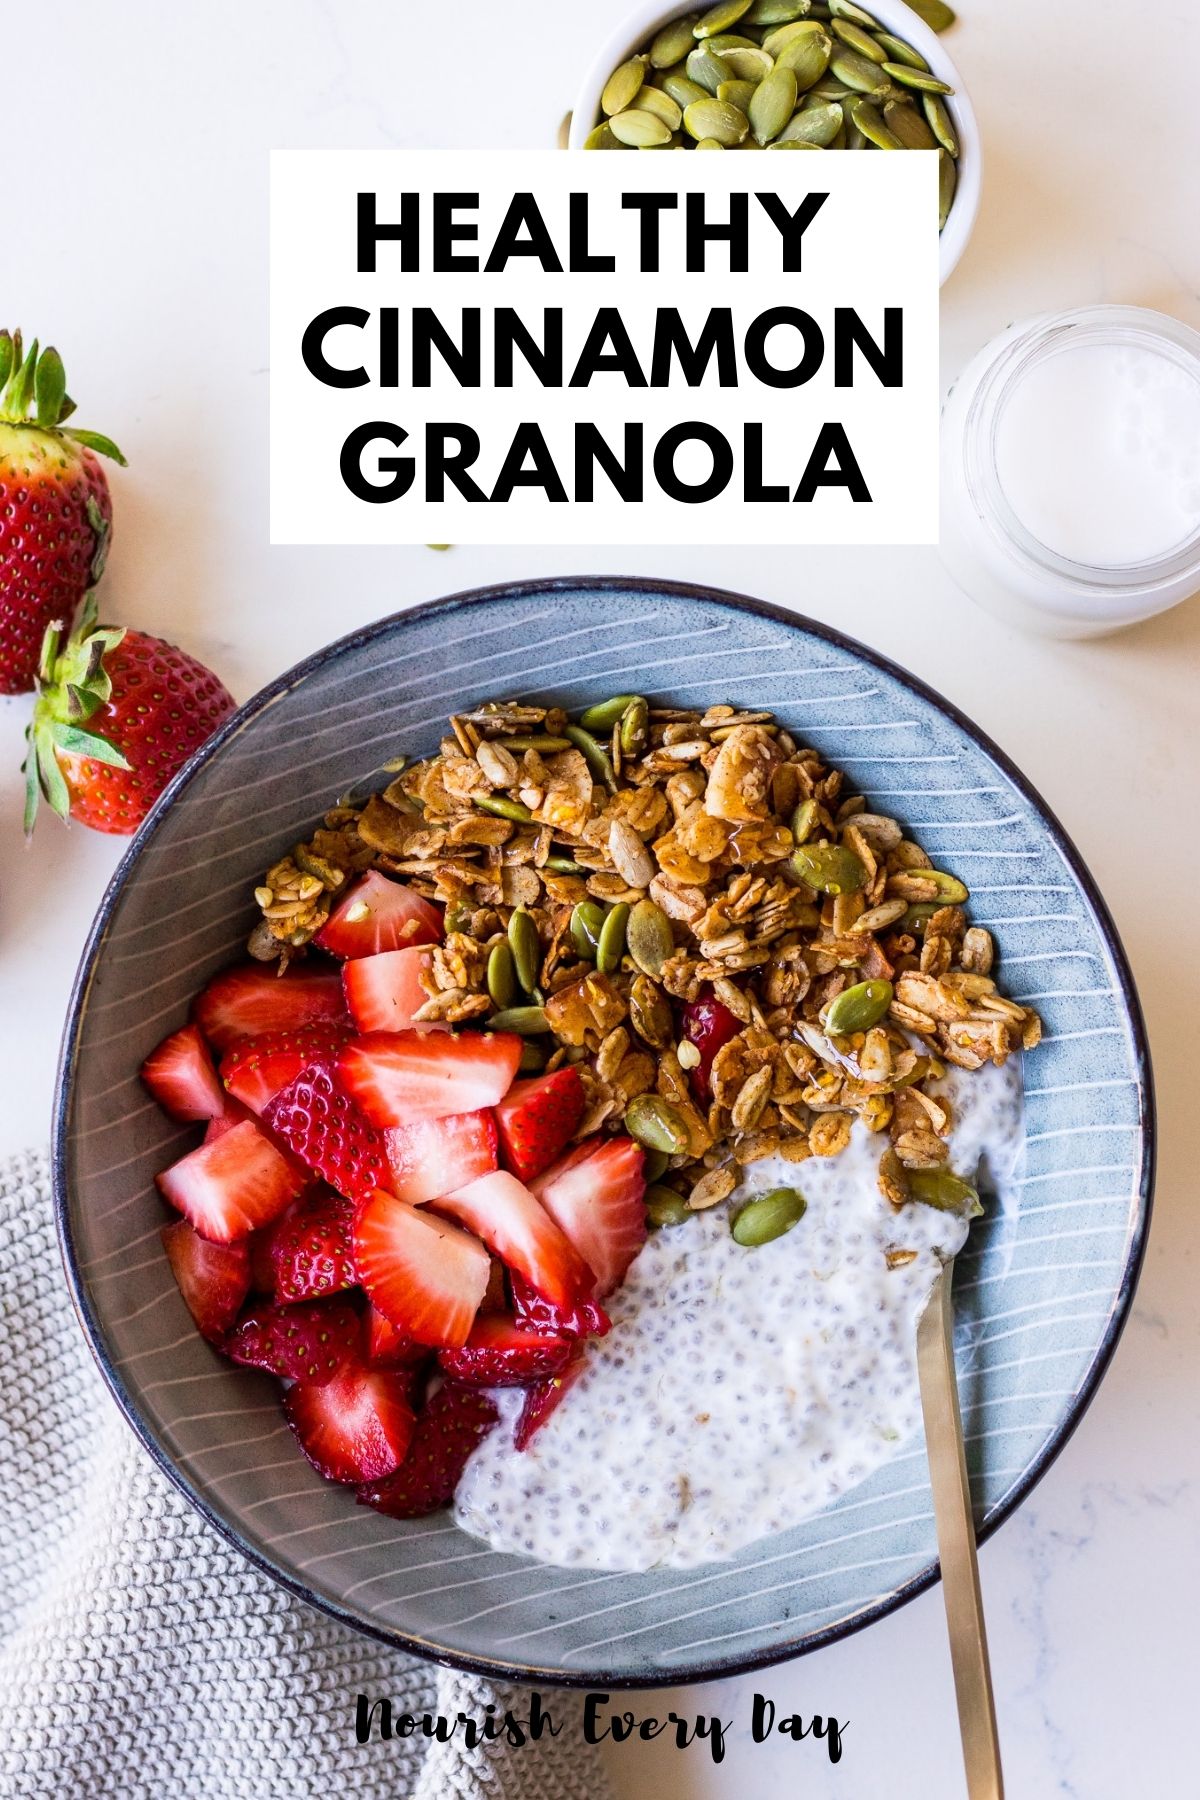 Healthy Cinnamon Granola Recipe Pin by Nourish Every Day